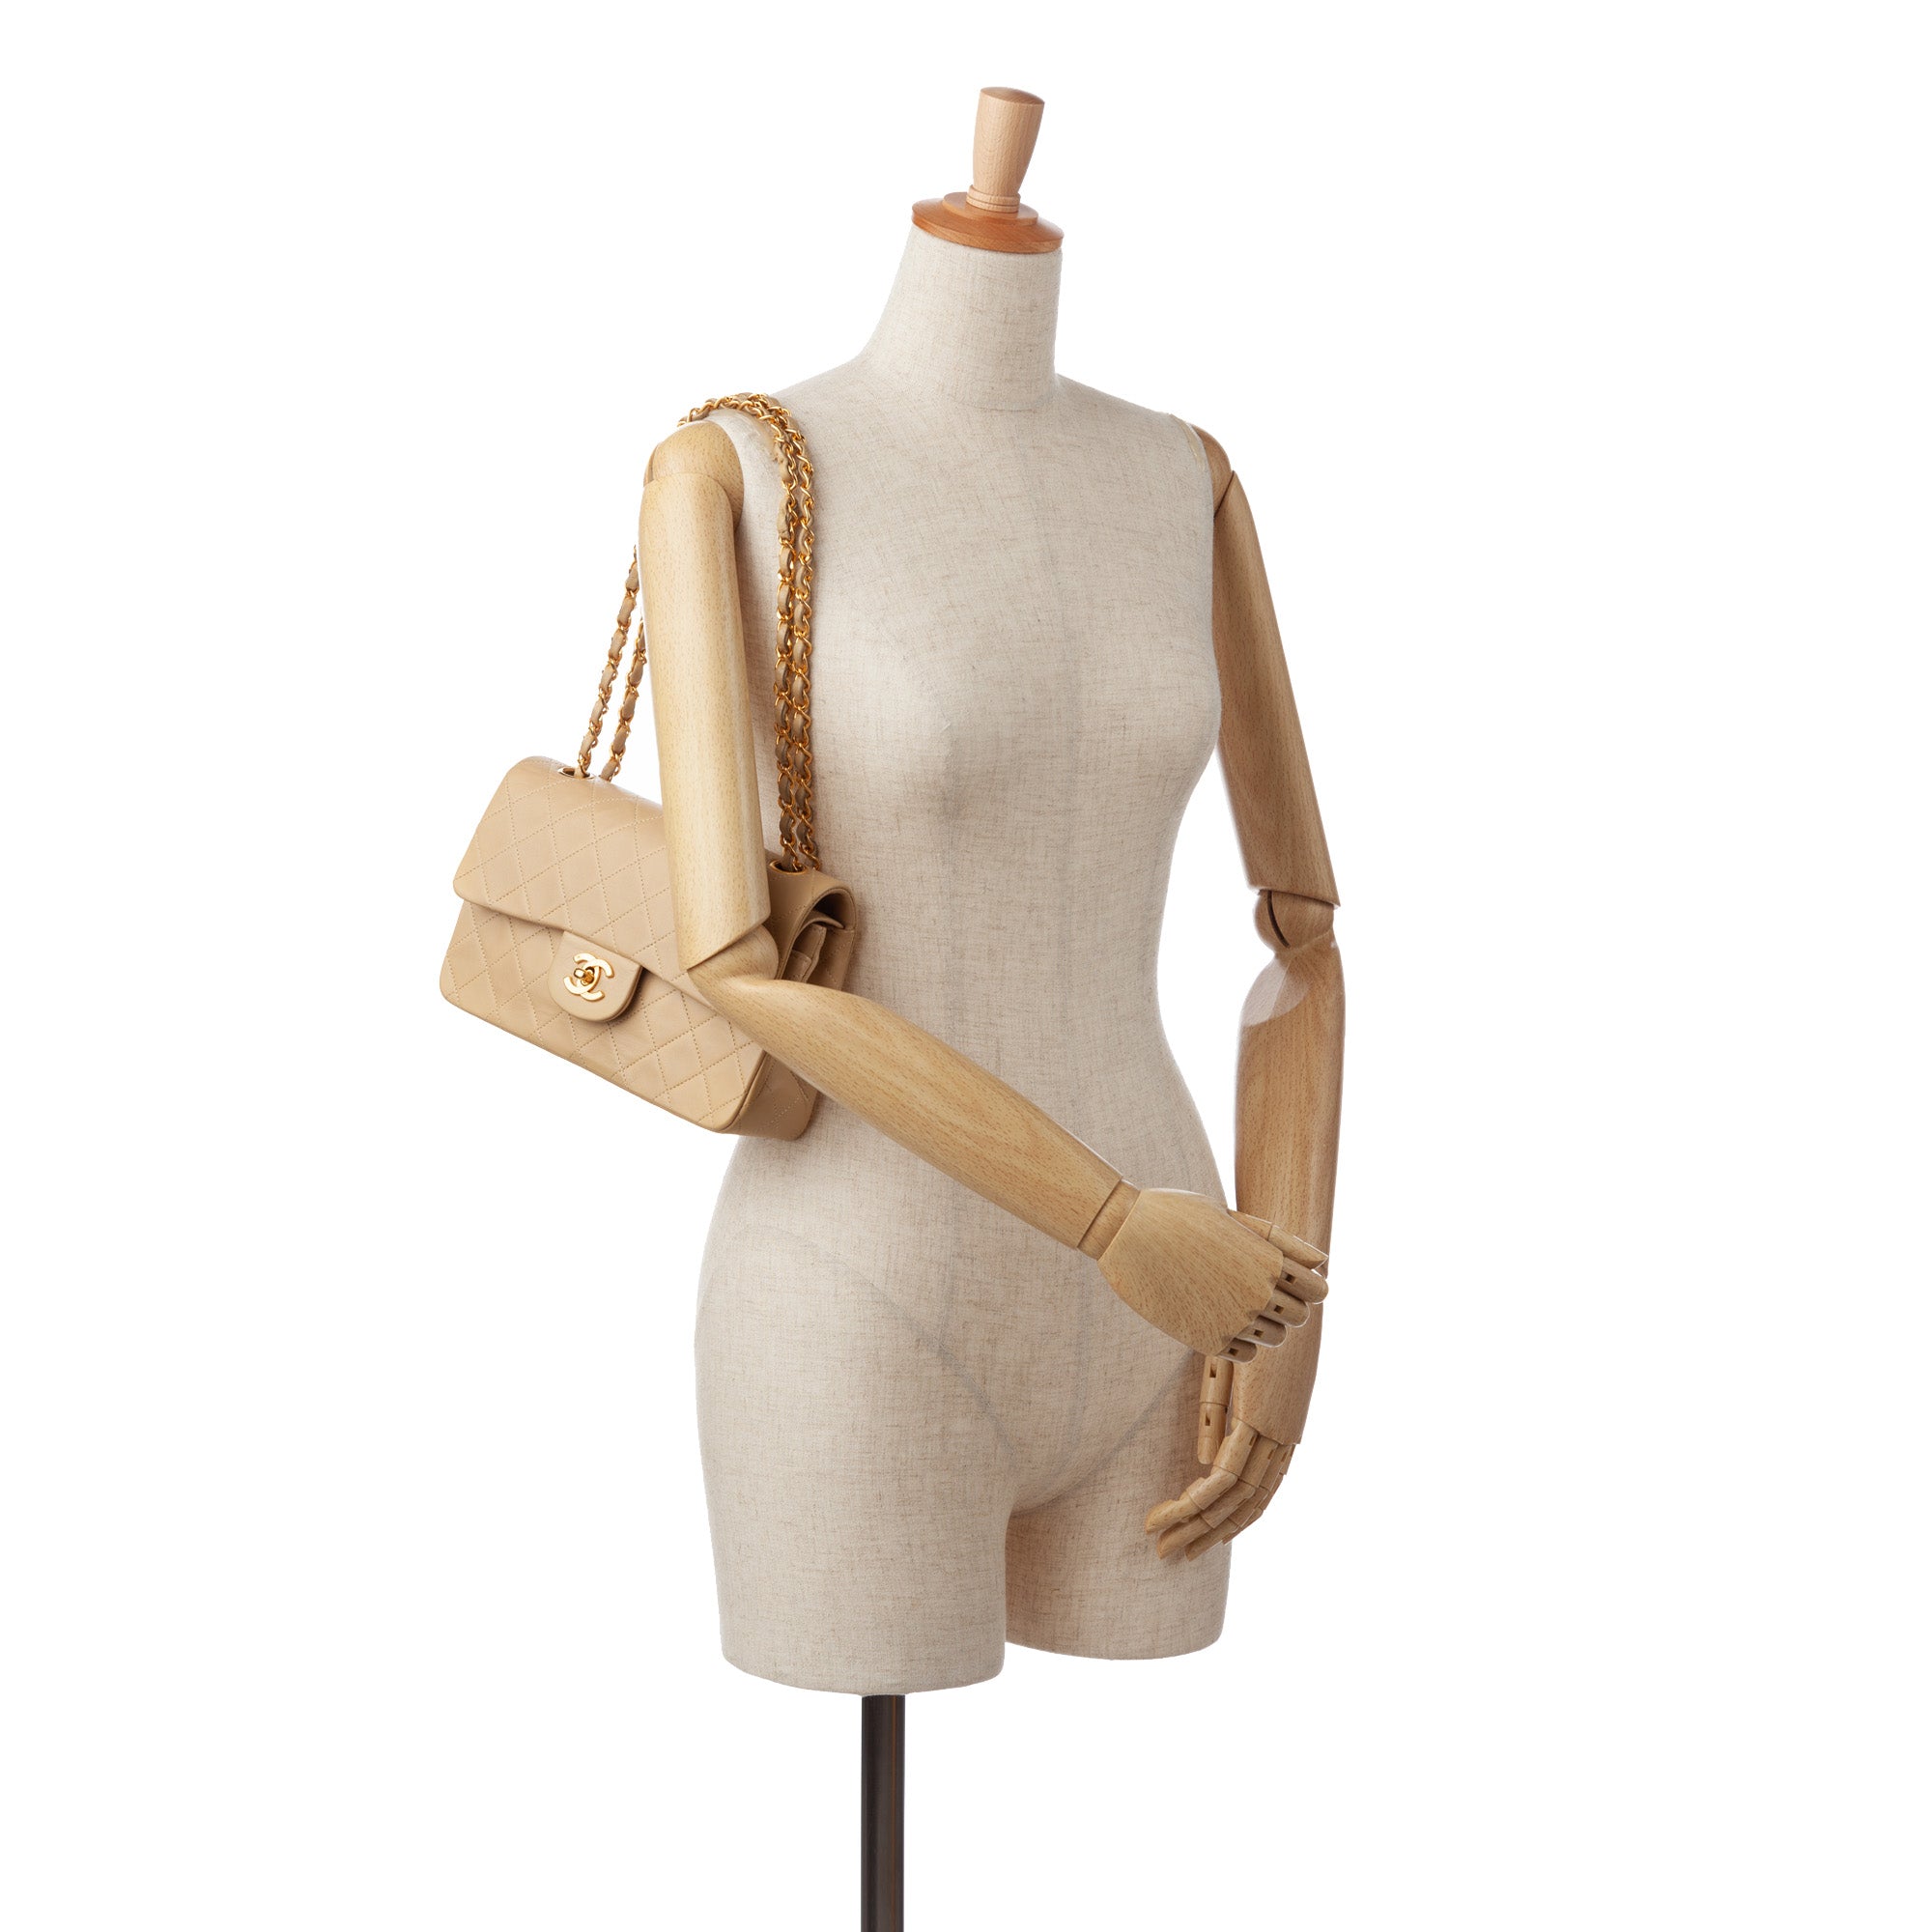 Tan Chanel Small Classic Lambskin Double Flap Shoulder Bag